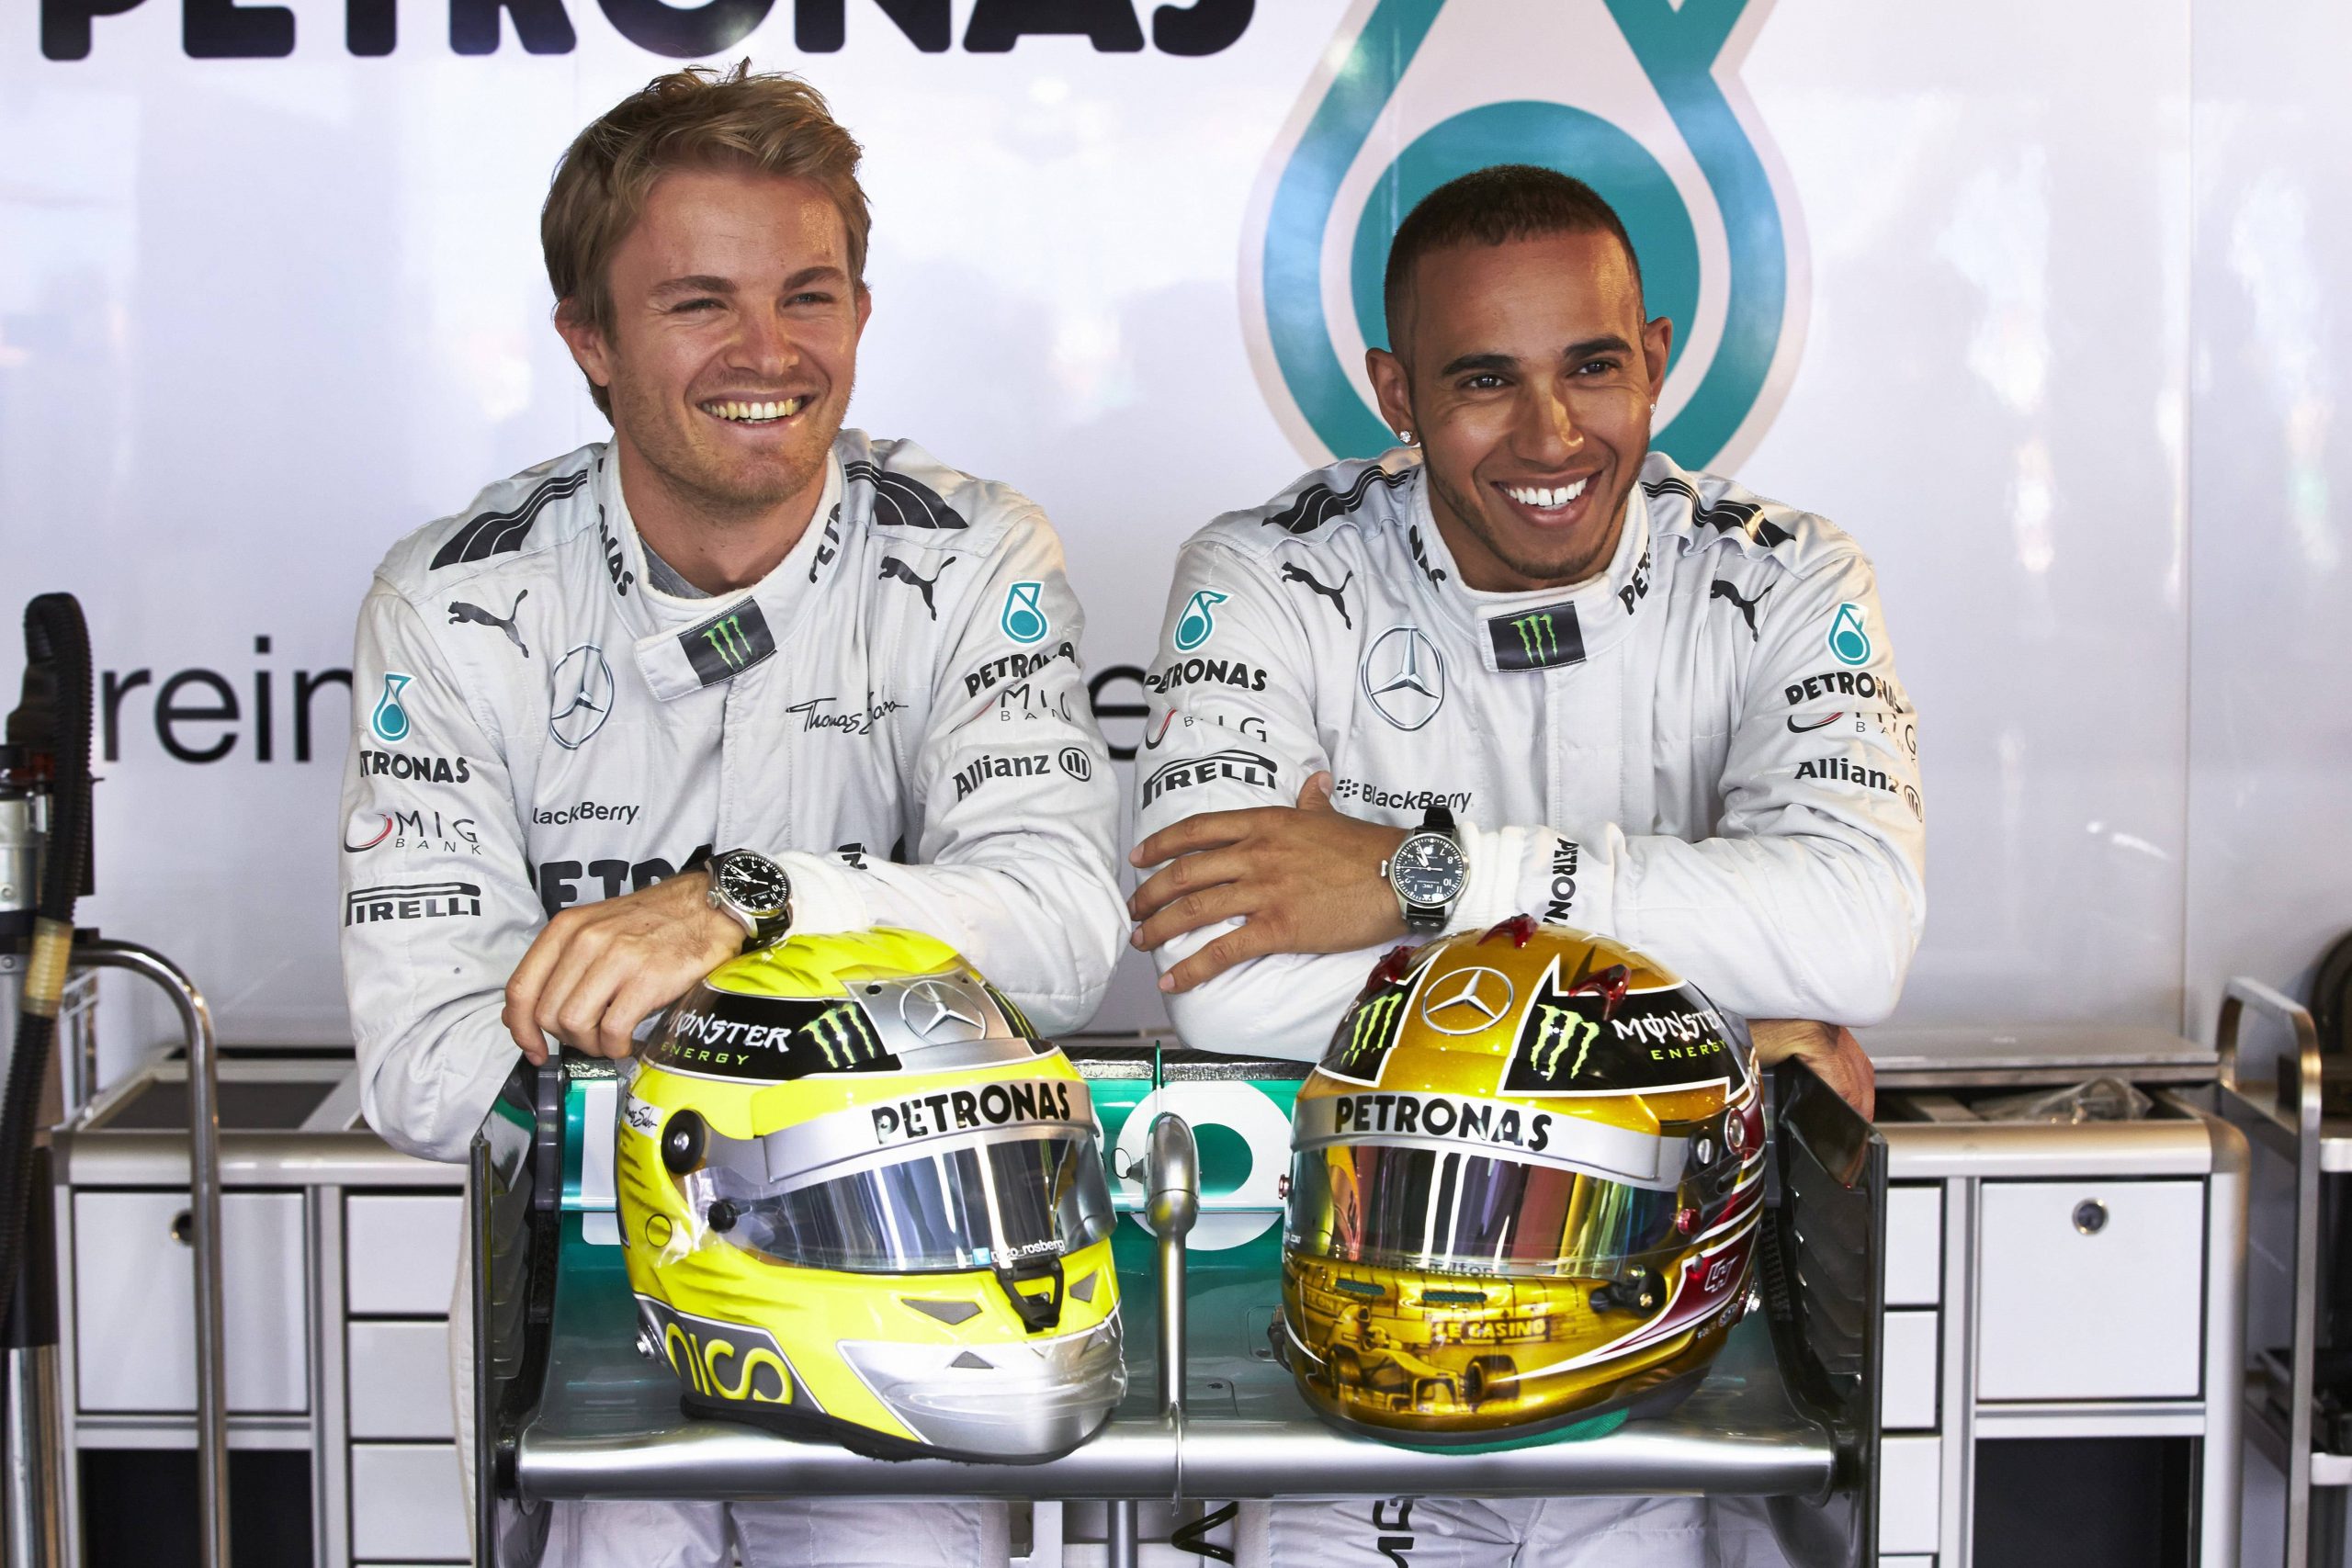 IWC Names Lewis Hamilton and Nico Rosberg Ambassadors